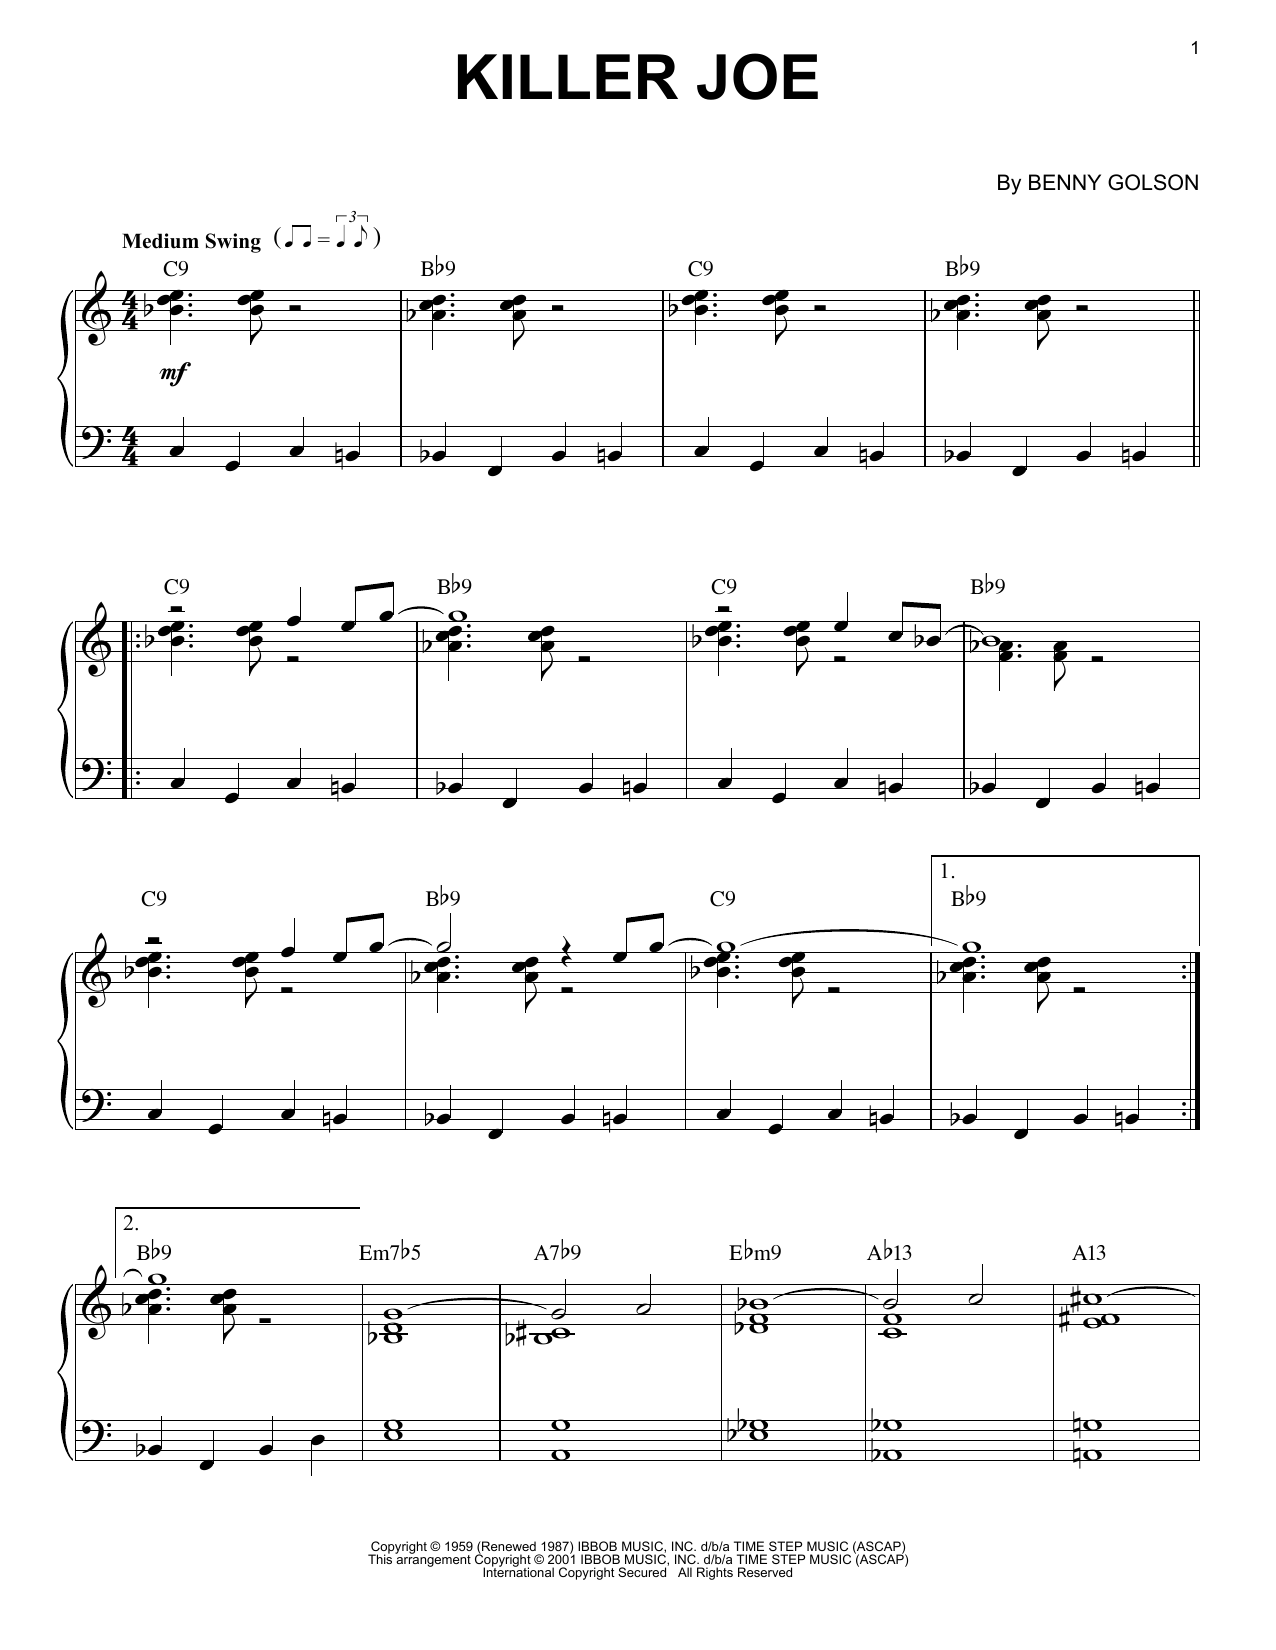 Benny Golson Killer Joe Sheet Music Notes & Chords for Real Book – Melody & Chords - Download or Print PDF